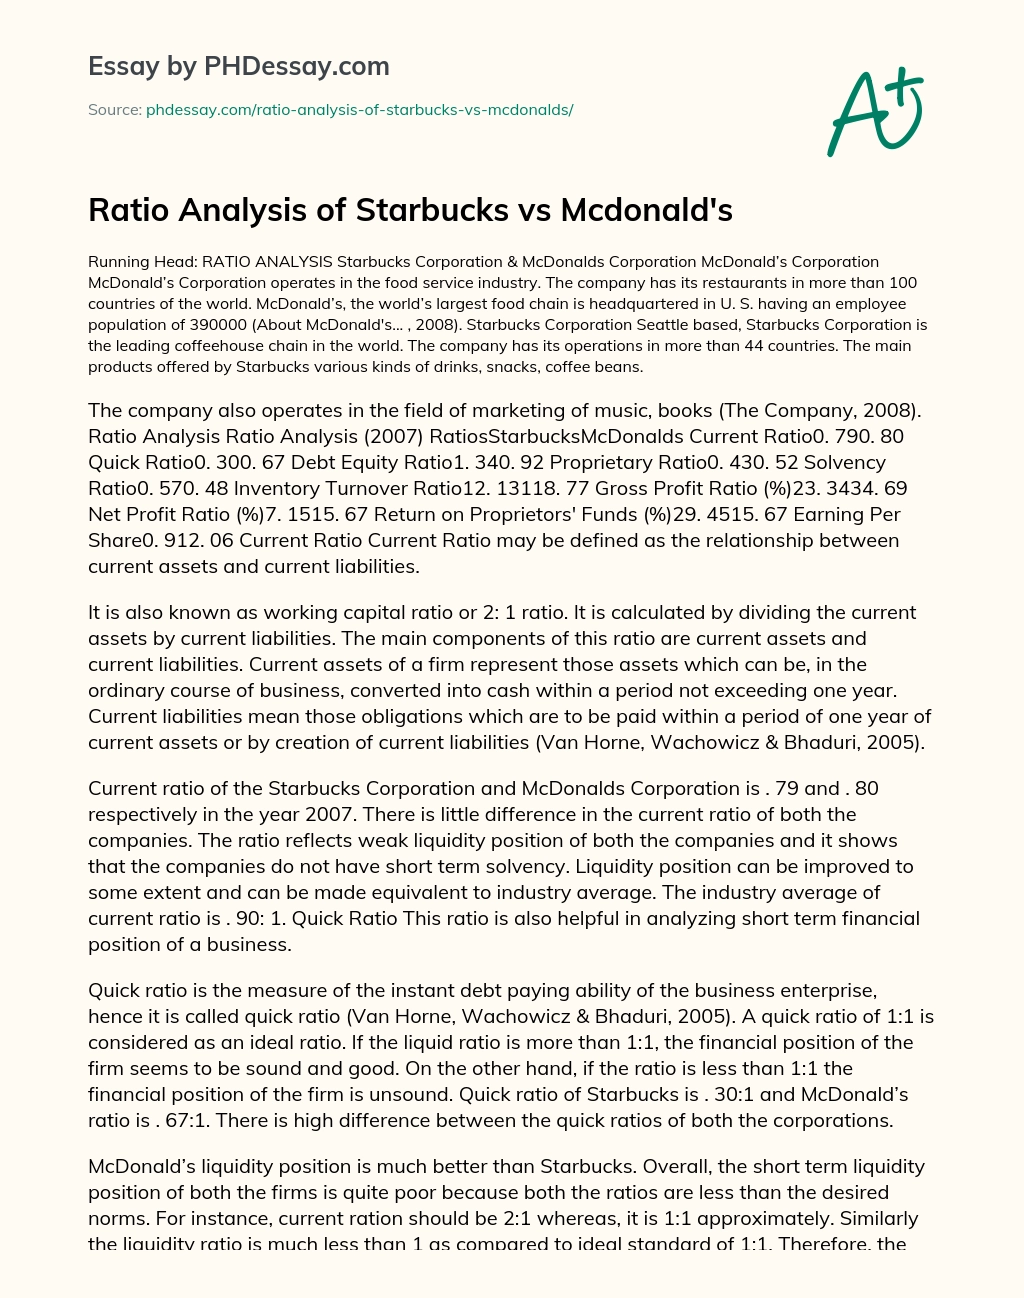 Ratio Analysis of Starbucks vs Mcdonald’s essay